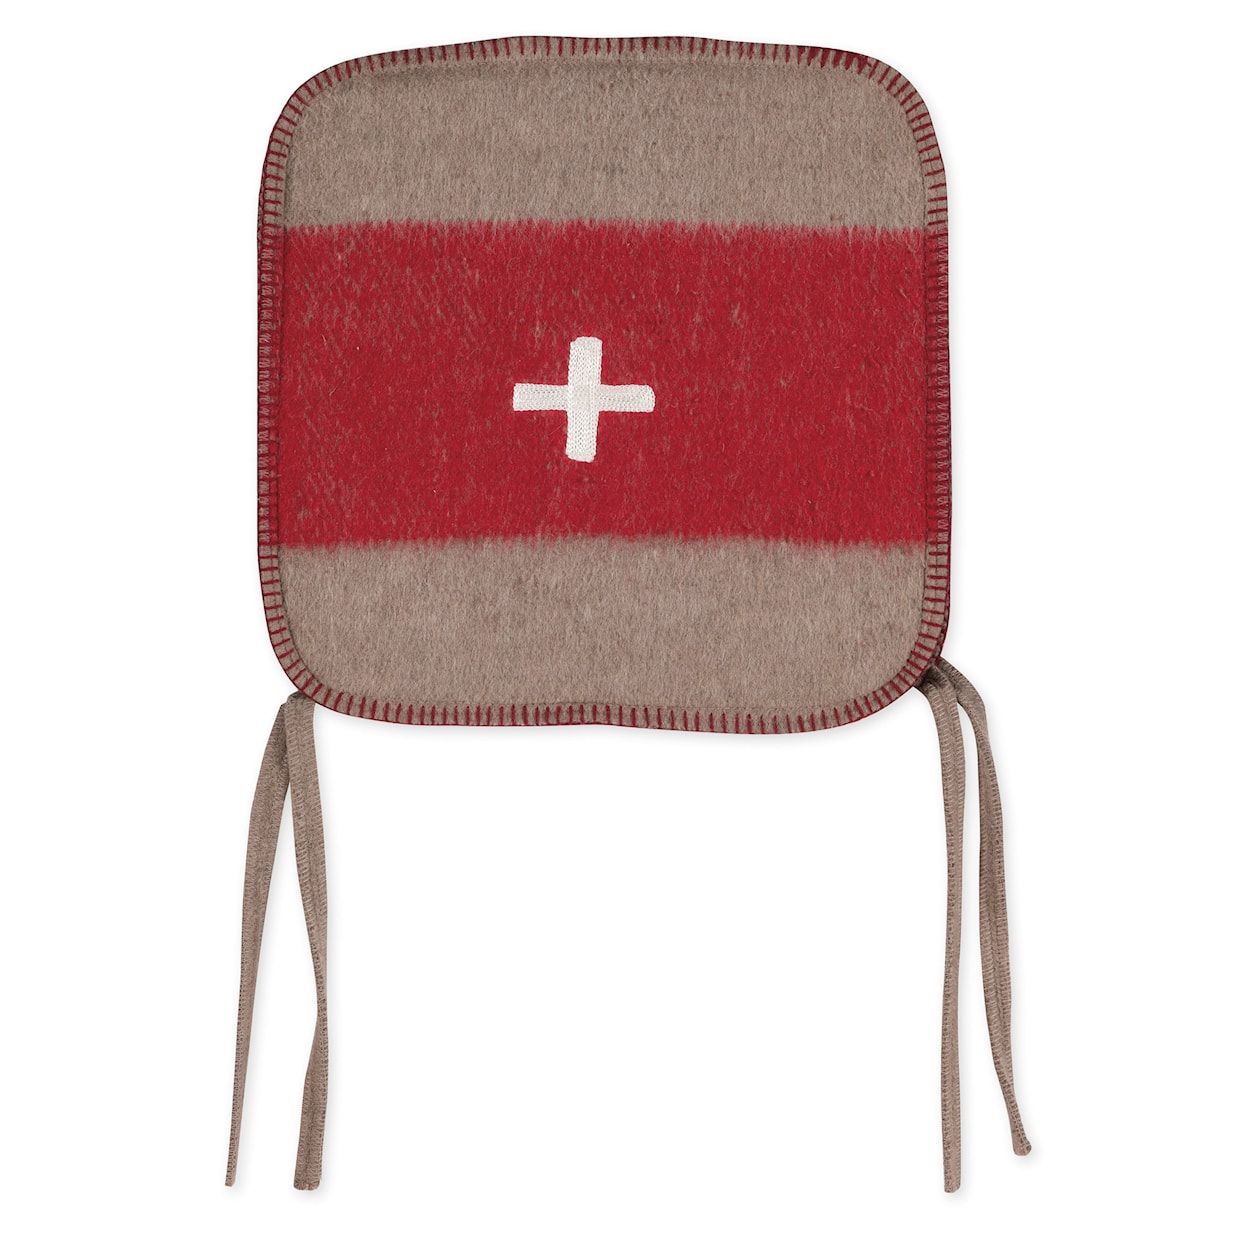 BOBO Intriguing Objects BOBO Intriguing Objects Swiss Army Chair Cushion 15x15 Brown/Red